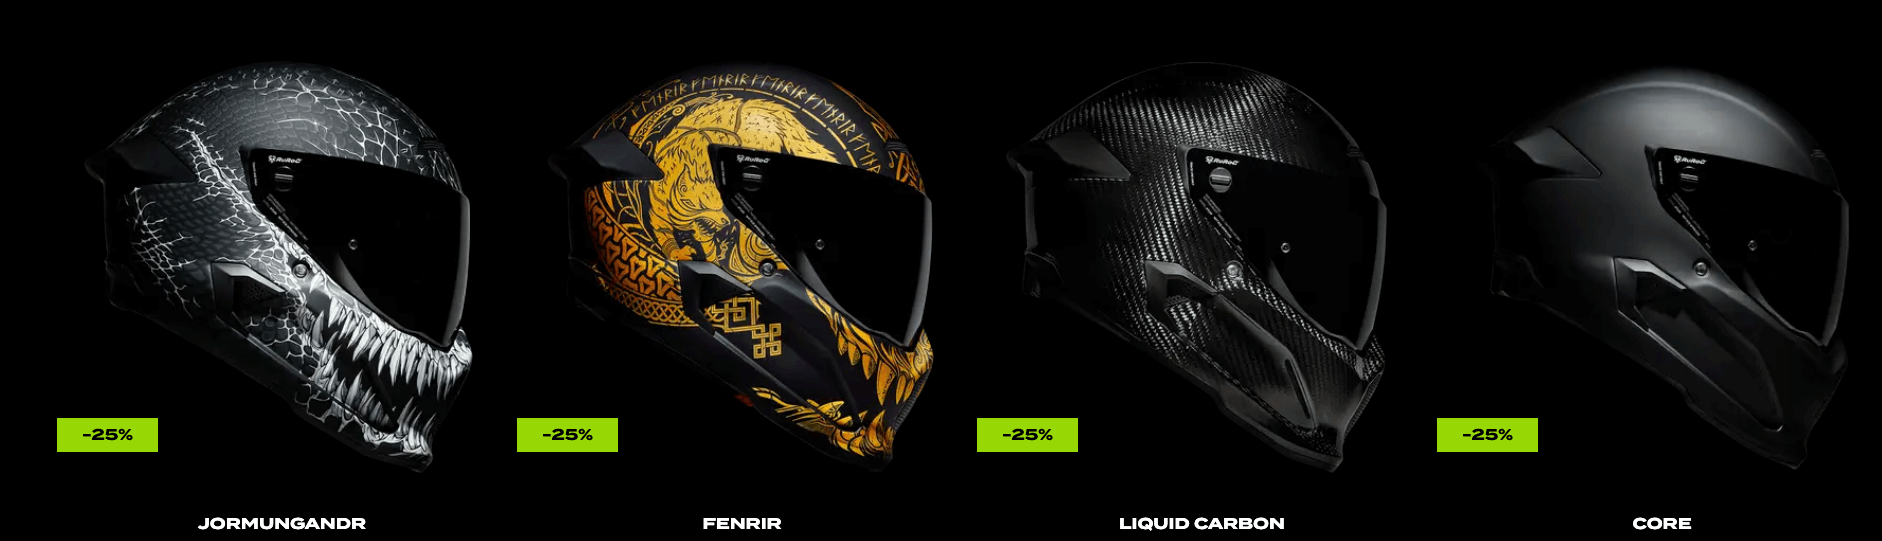 Win an ATLAS 4.0 Carbon Helmet from Ruroc